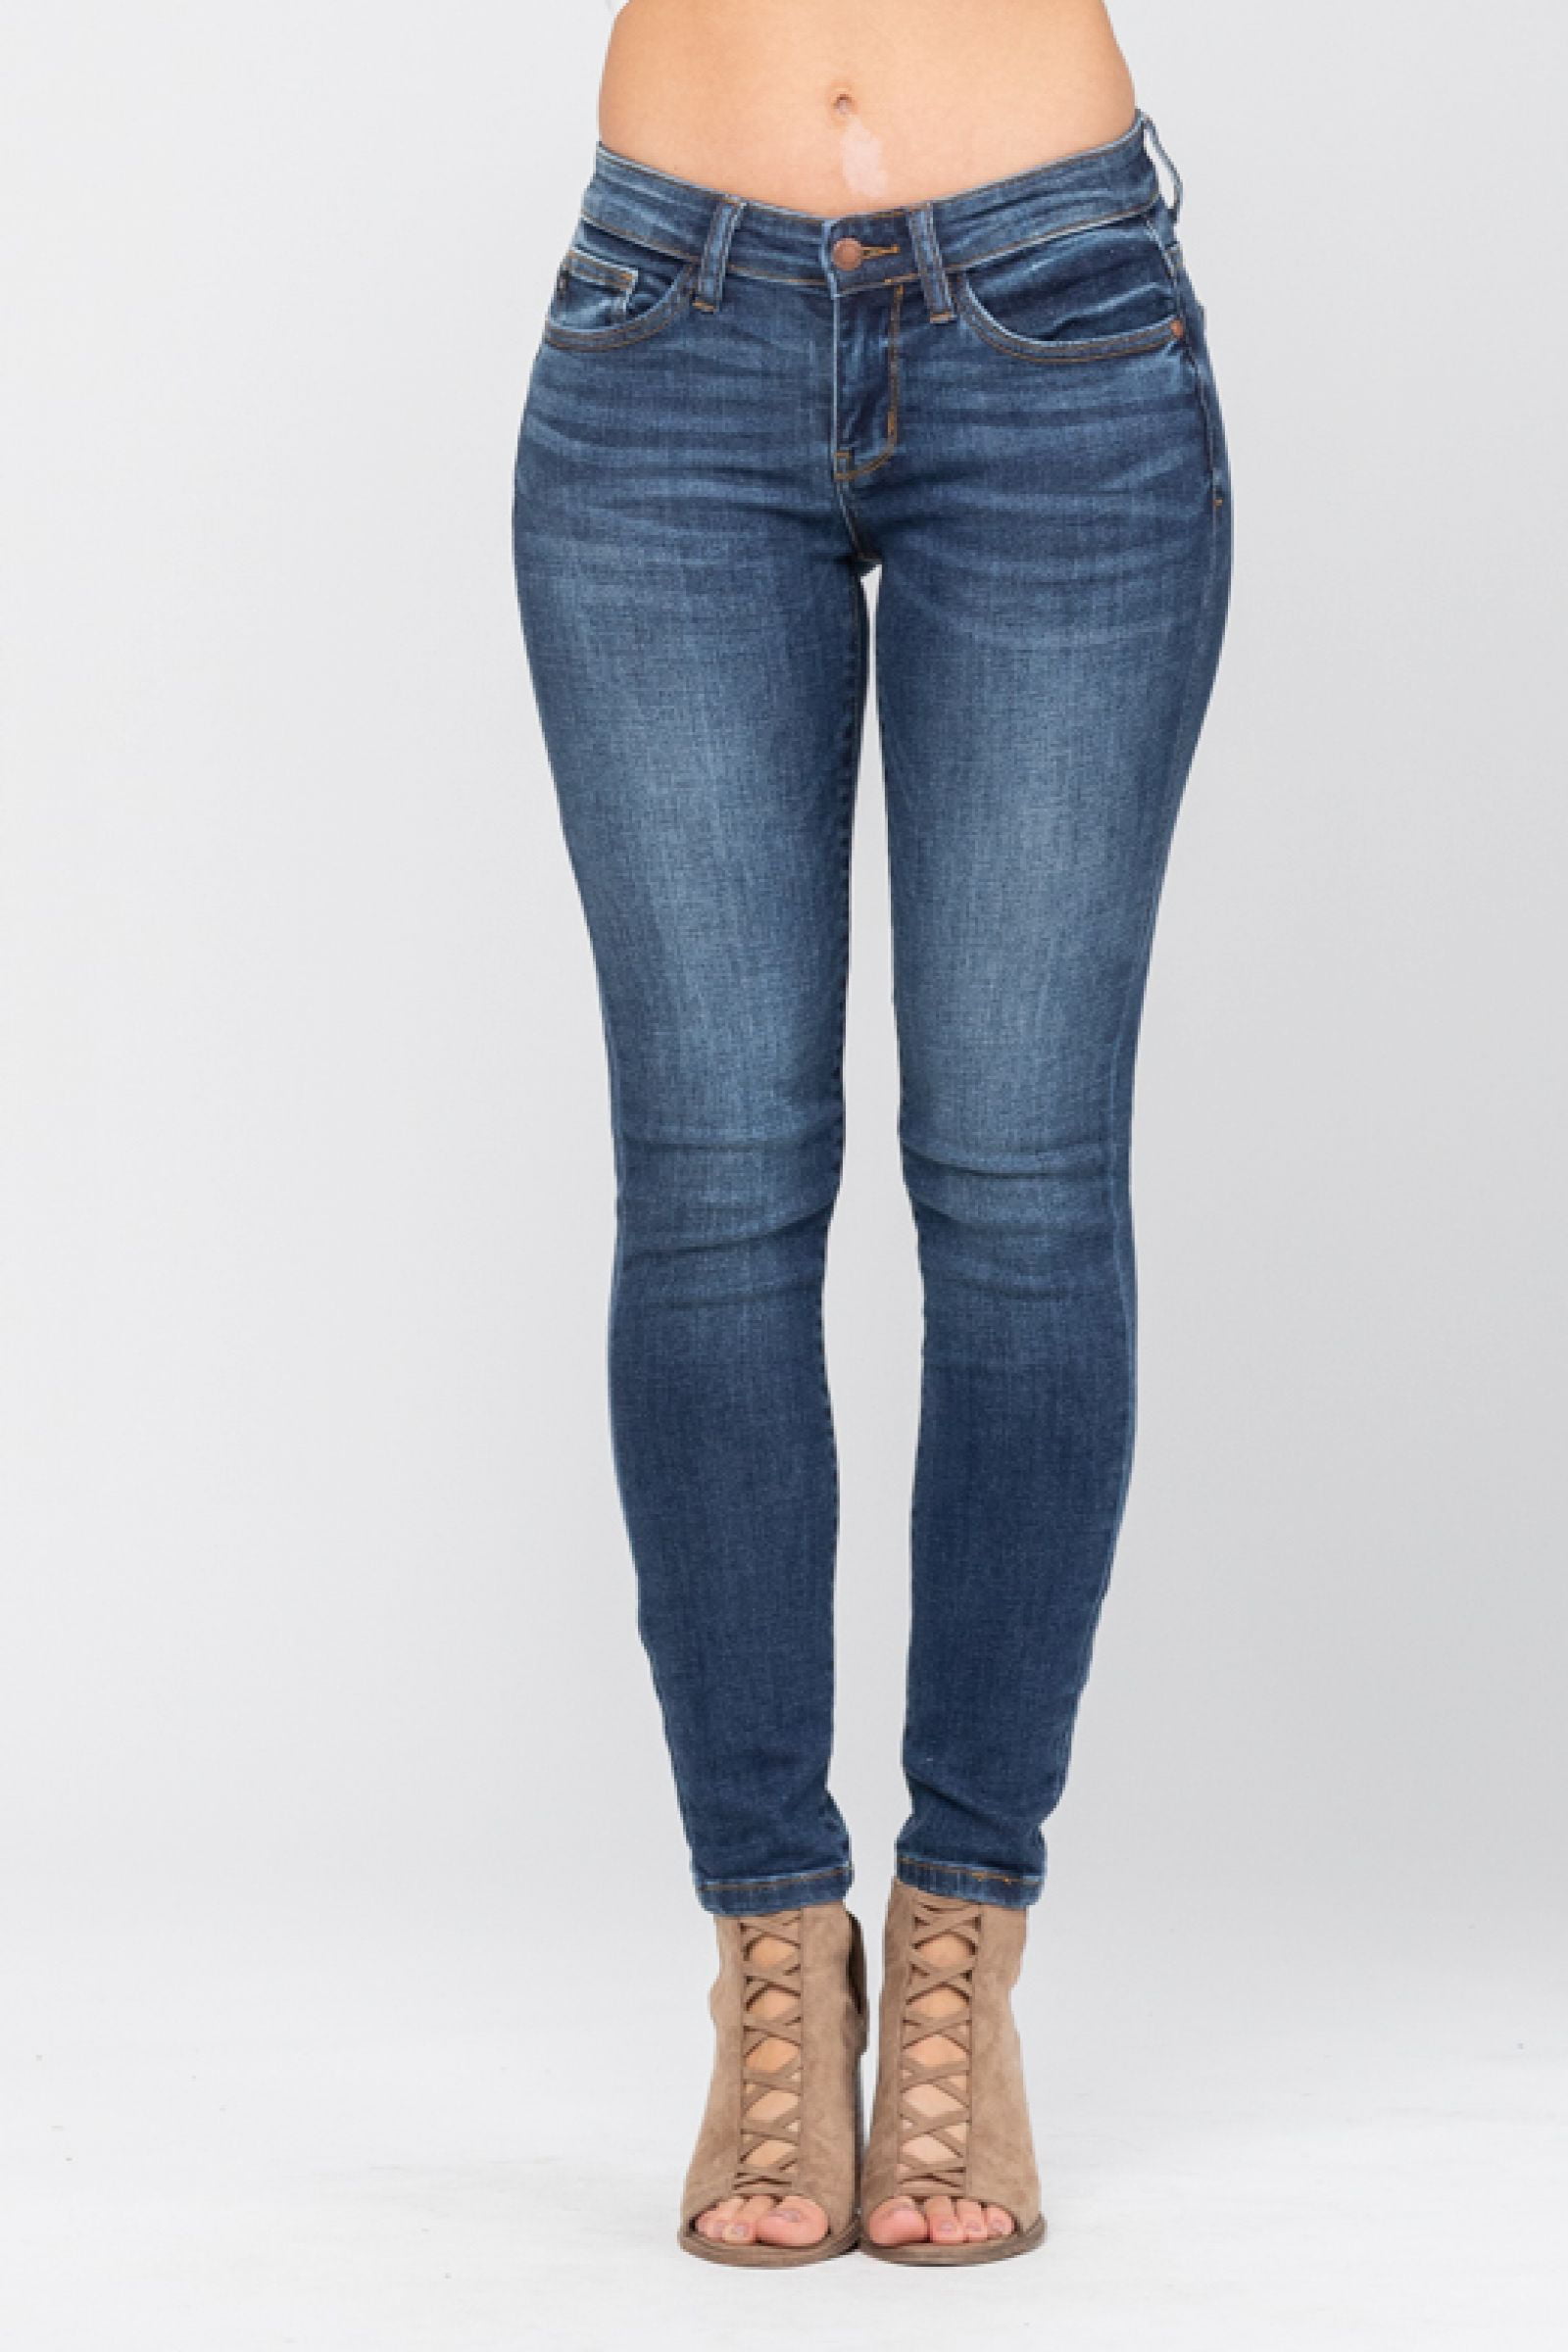 Judy Blue Judy Blue Women S Mid Rise Skinny Jeans Style 82106